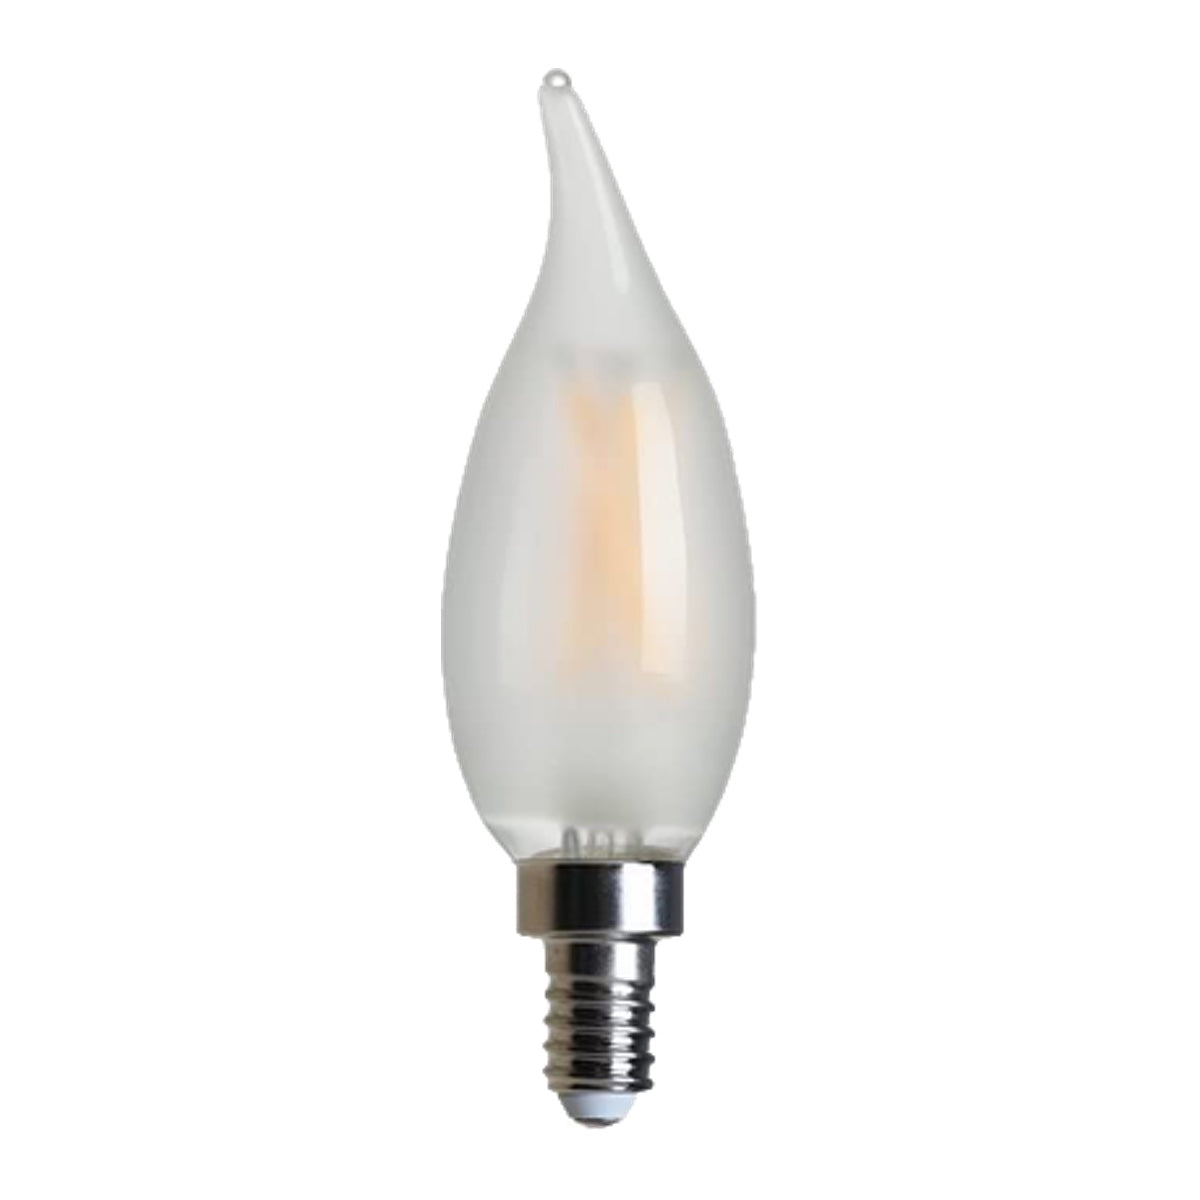 Candelabra Frosted Flame Tip Bulb 4 Watt LED Dimmable E12 2700K